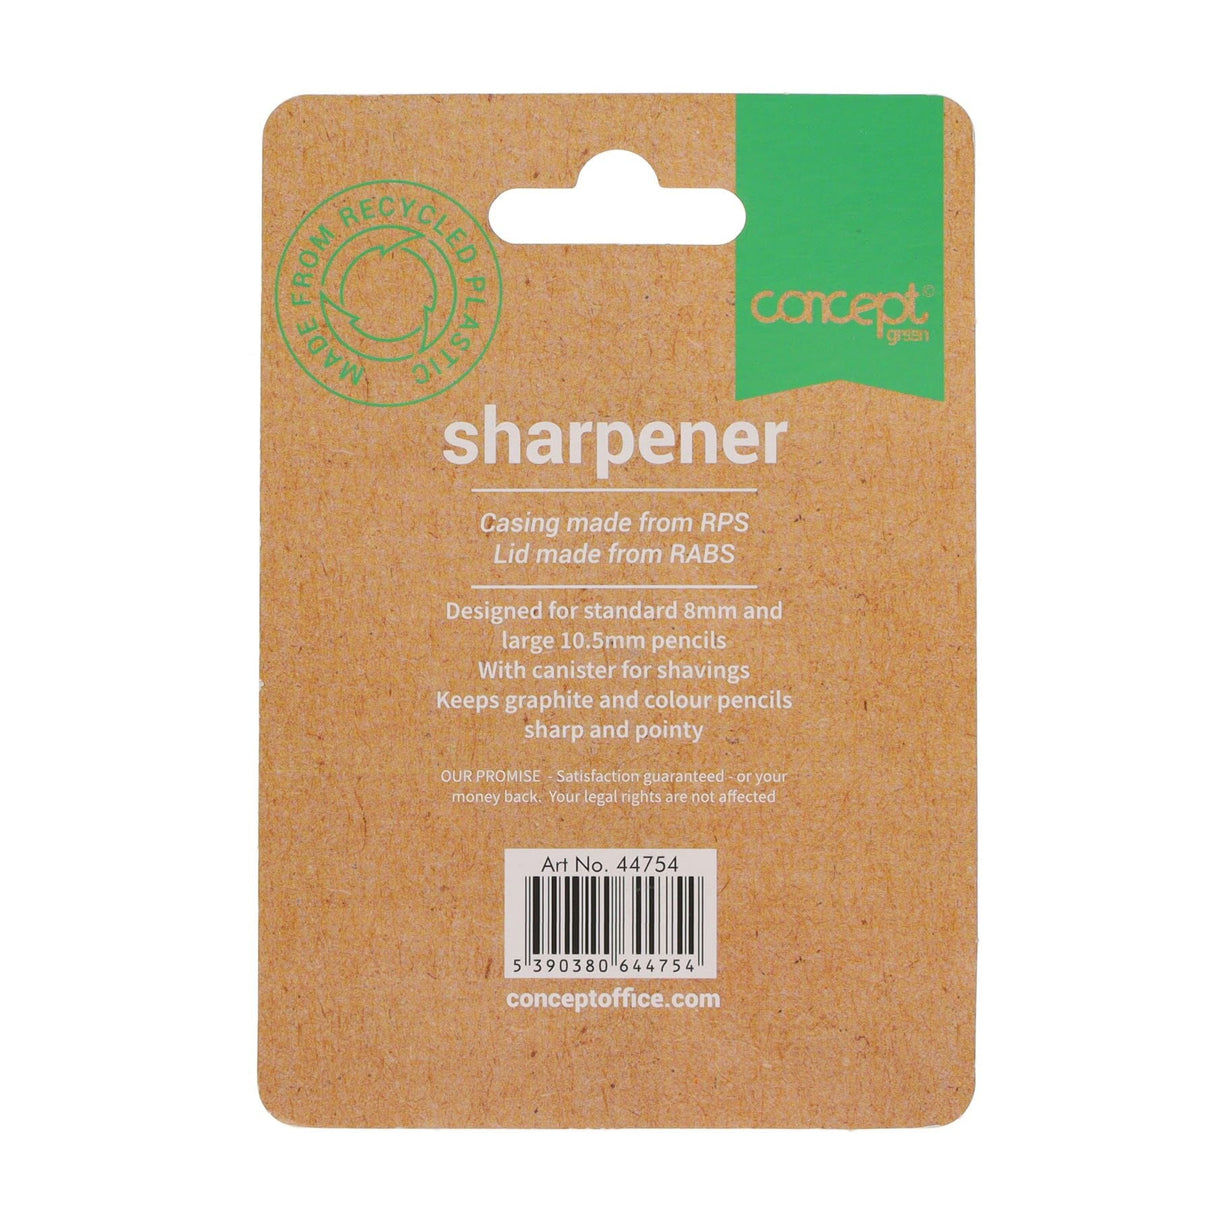 Concept Green Twin Hole Sharpener | Stationery Shop UK